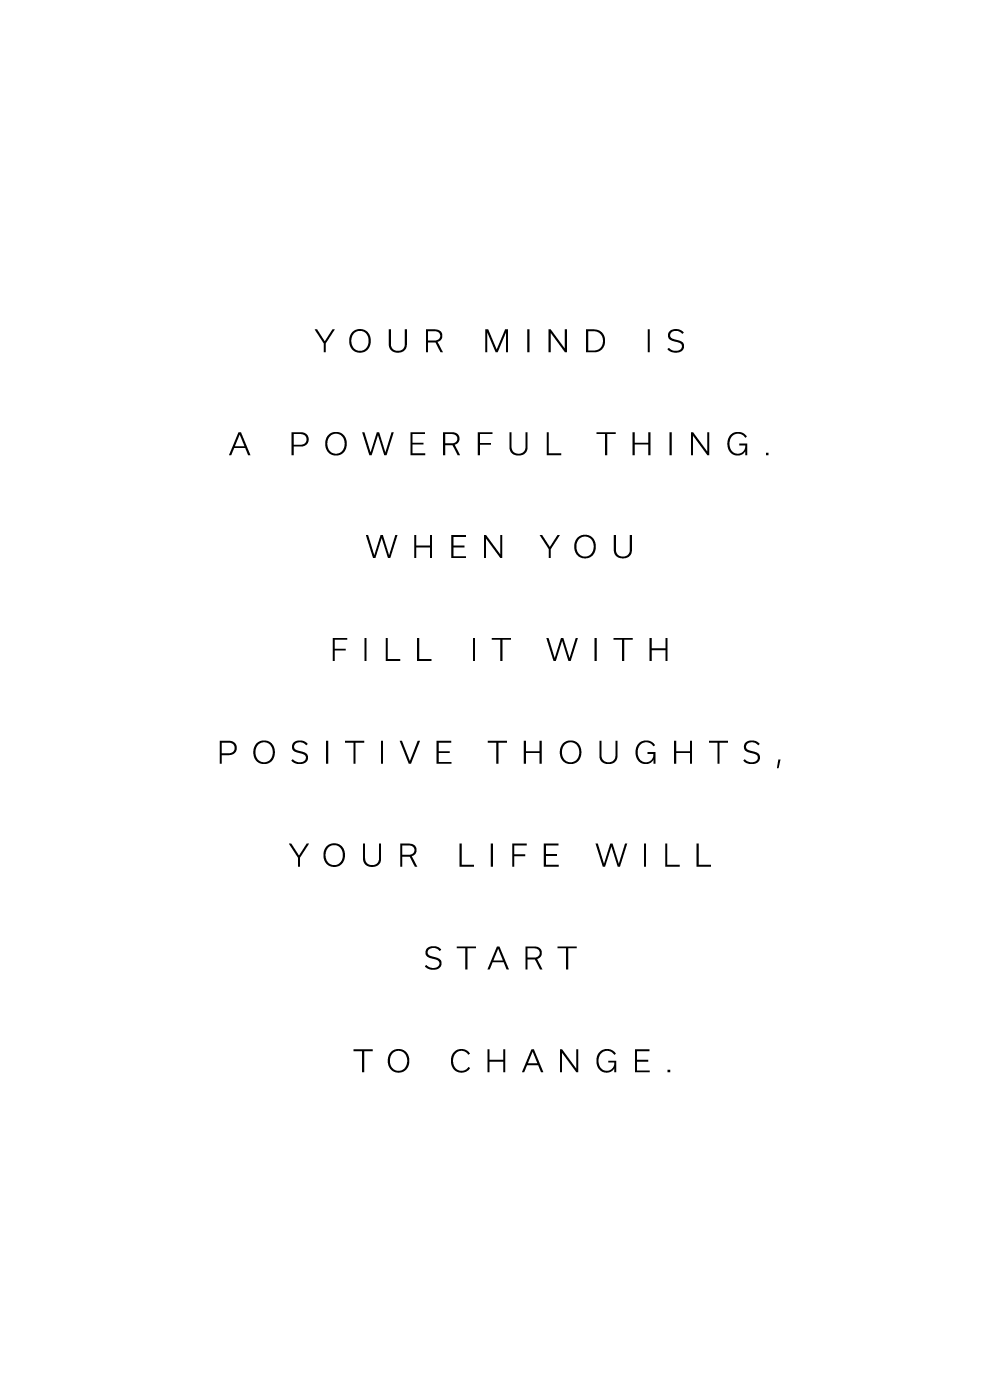 "You mind is a powerful thing" citatplakat